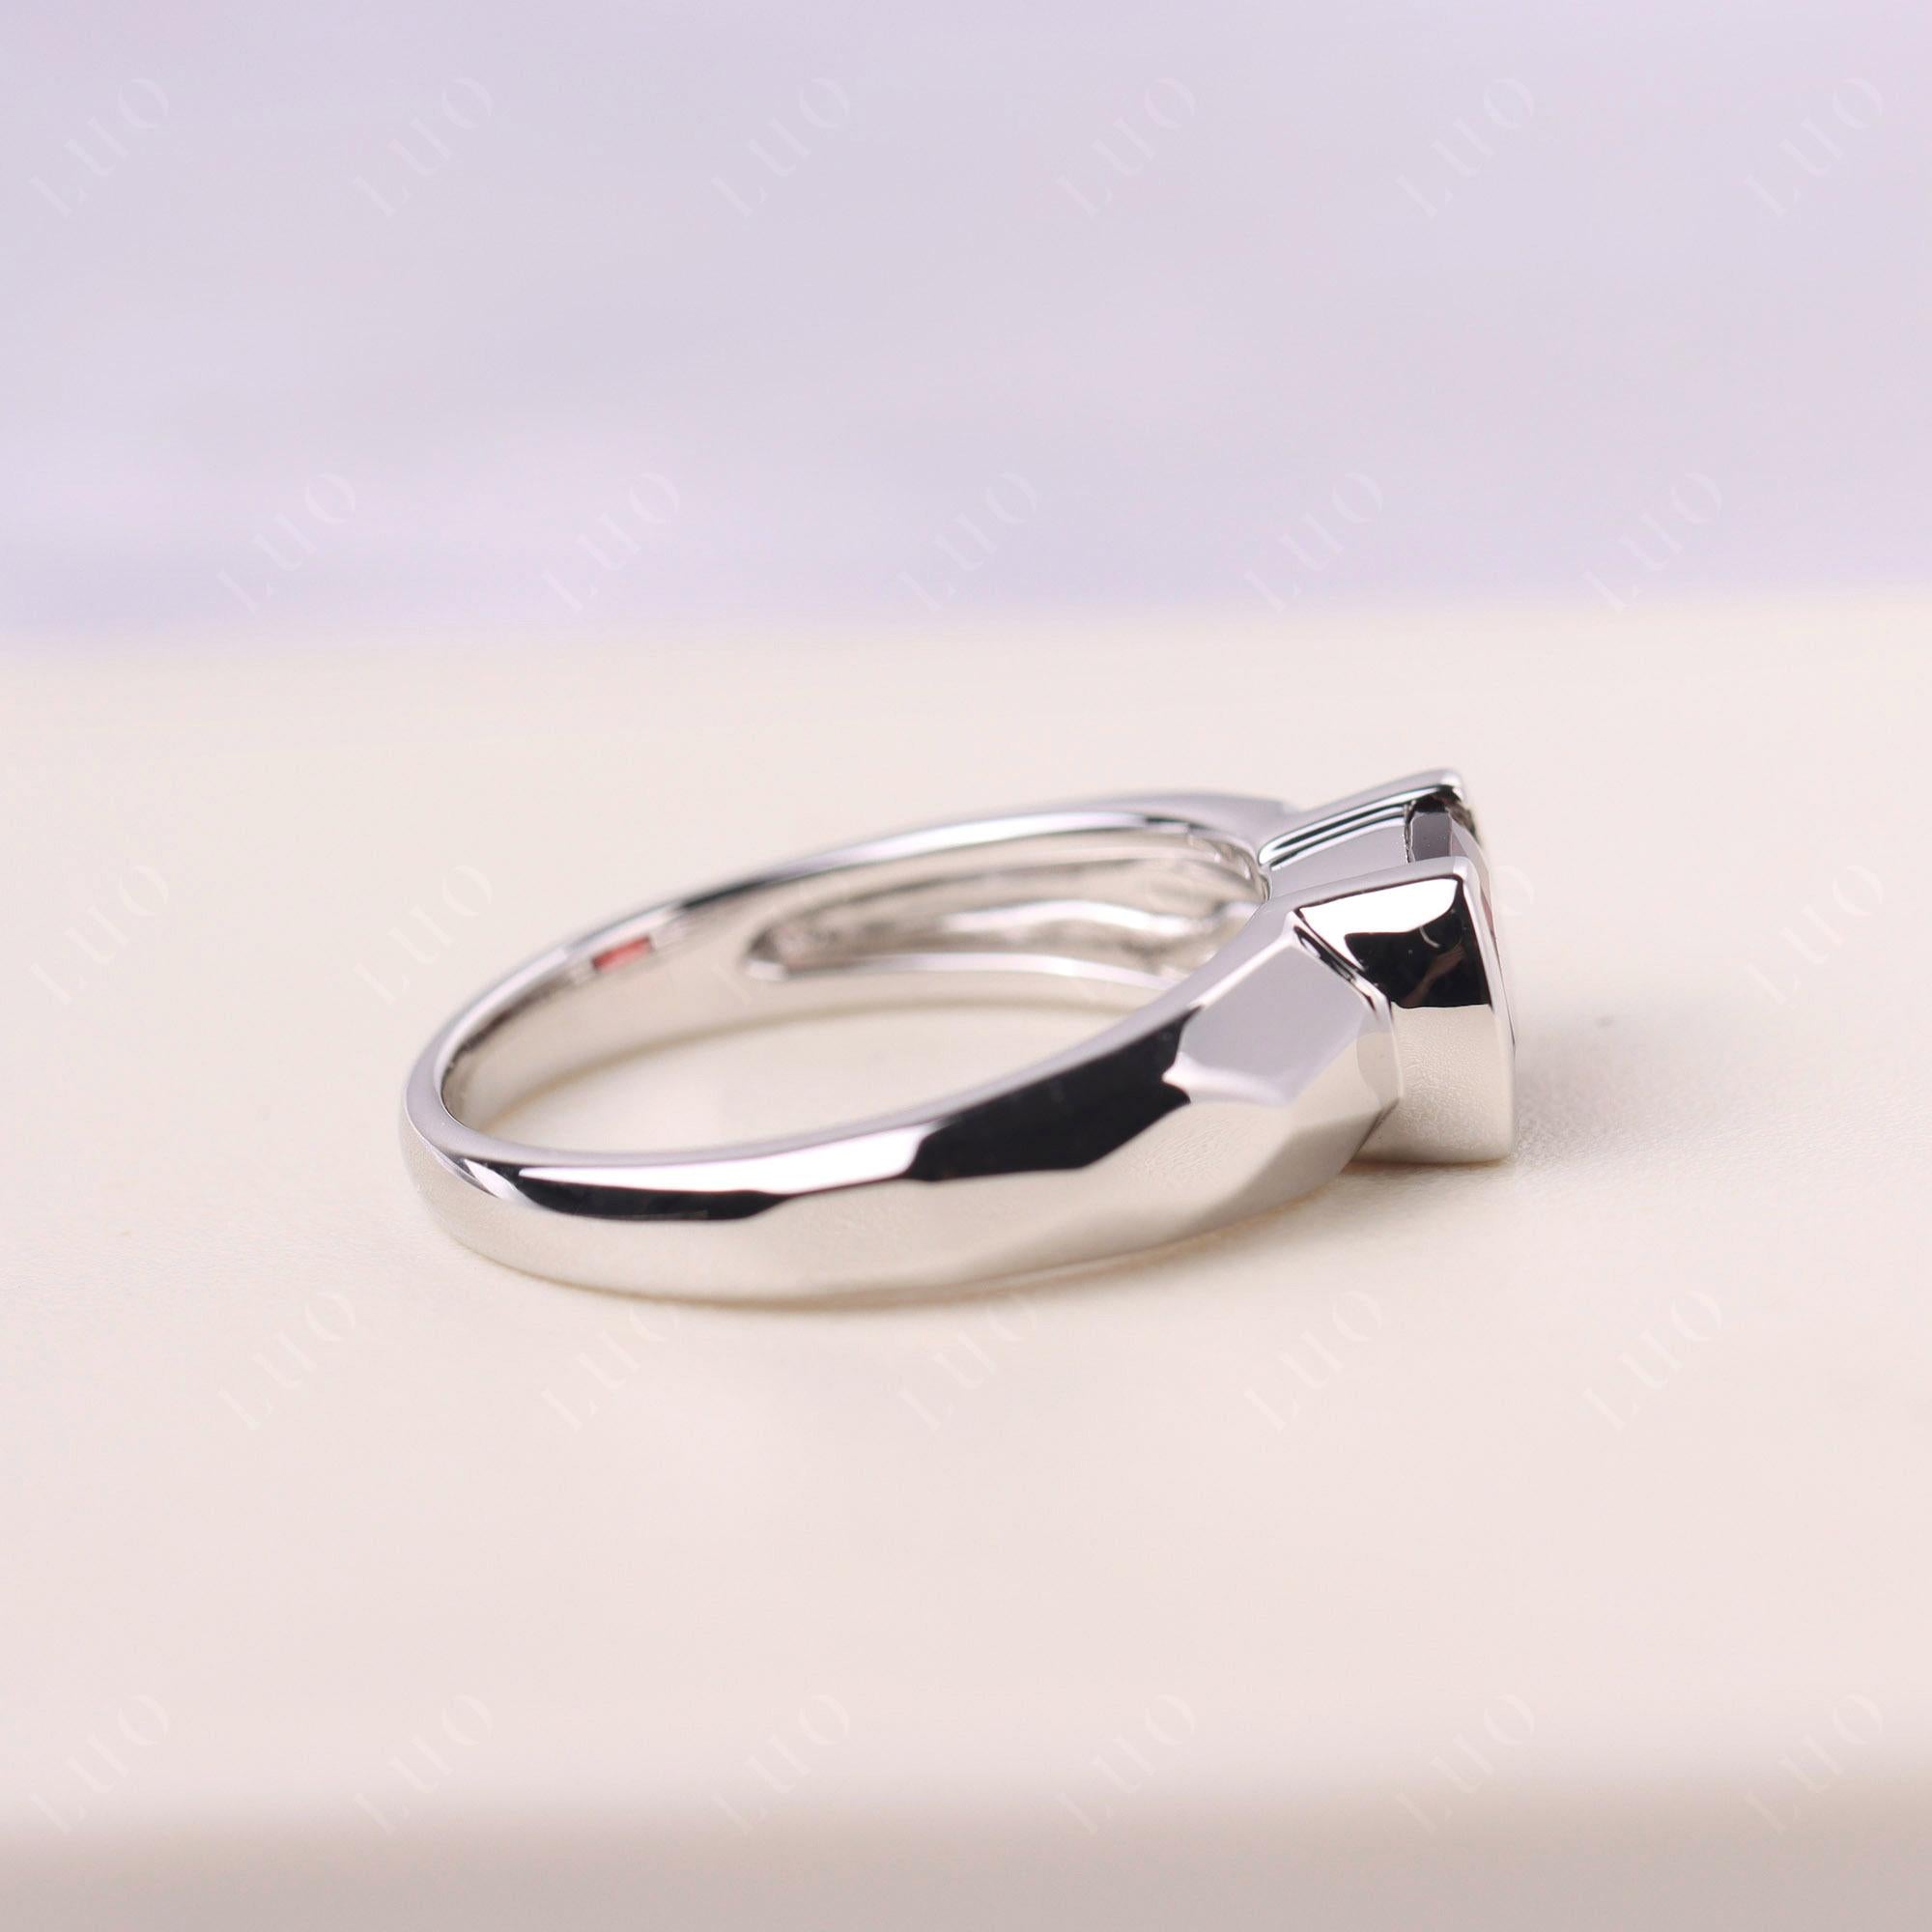 Elongated Cushion Garnet Engagement Ring - LUO Jewelry